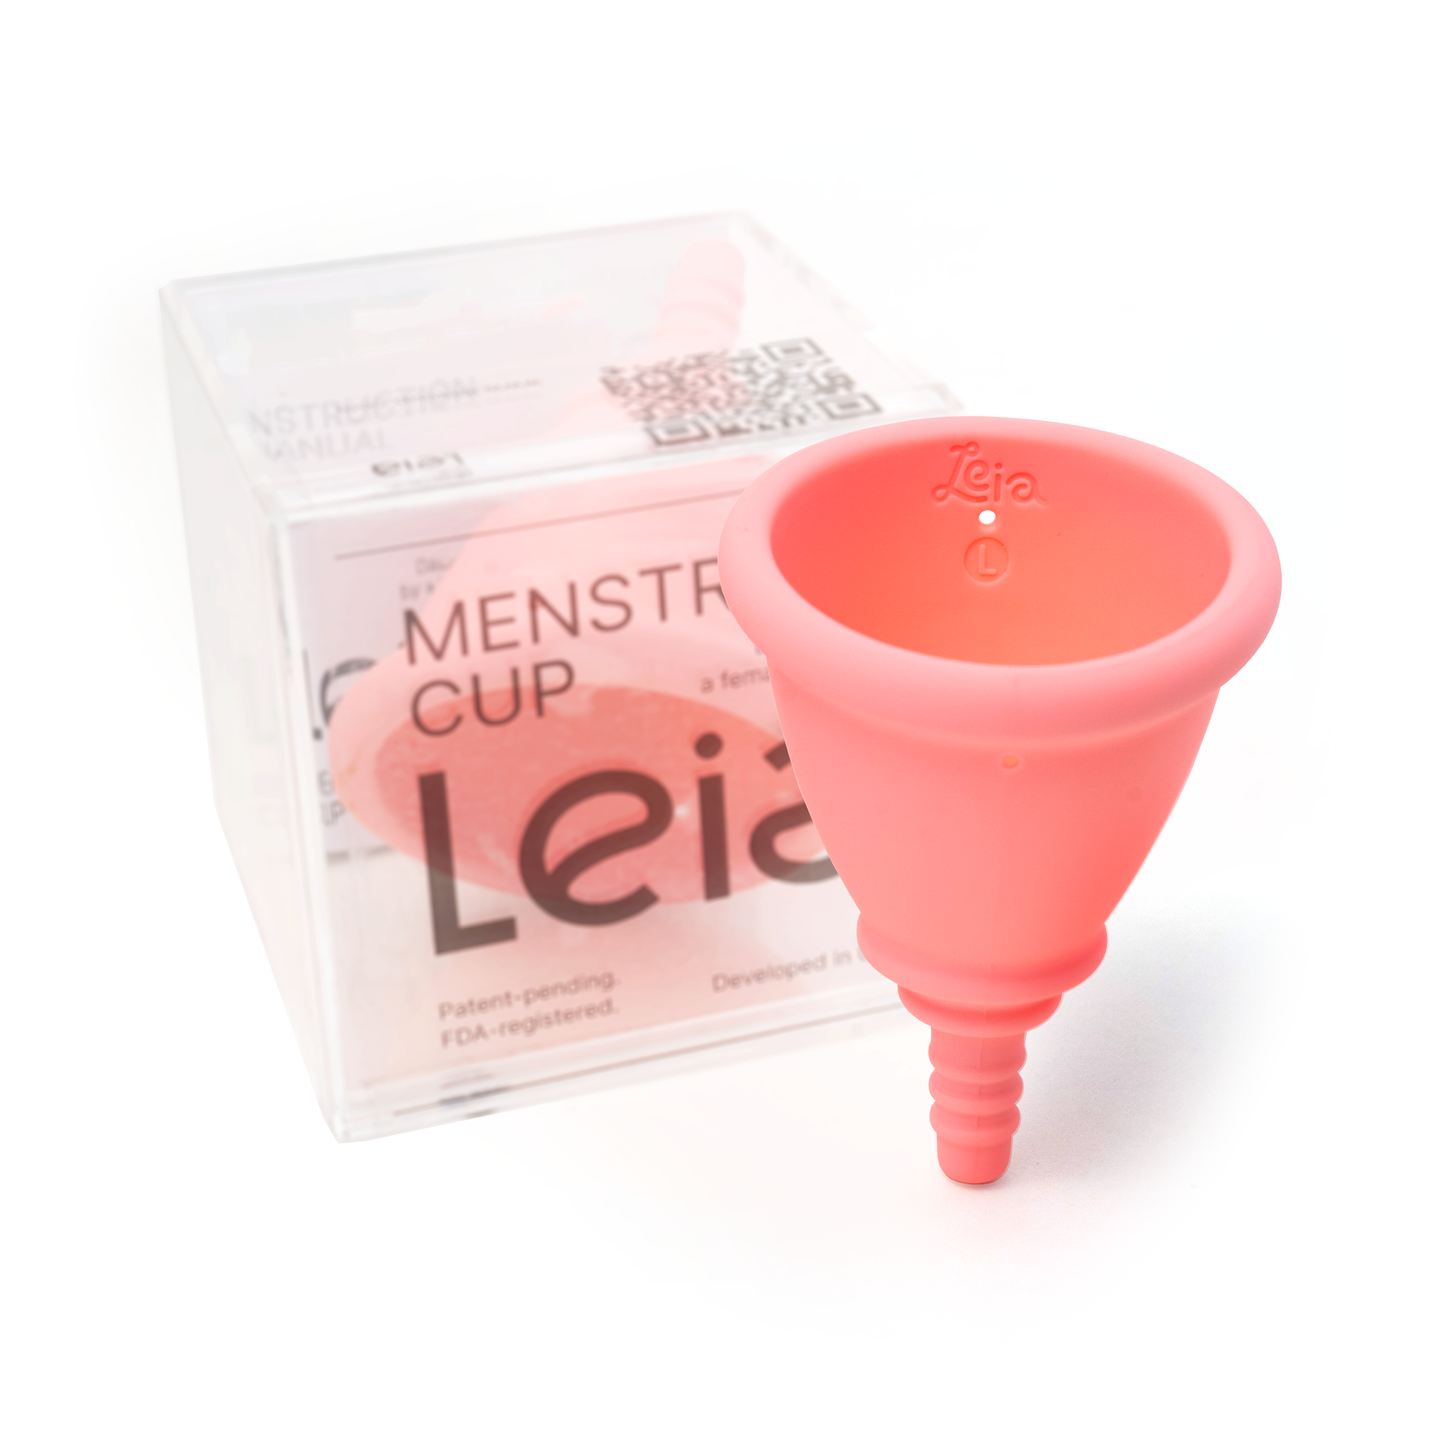 LEIA Menstrual Cup — Size L